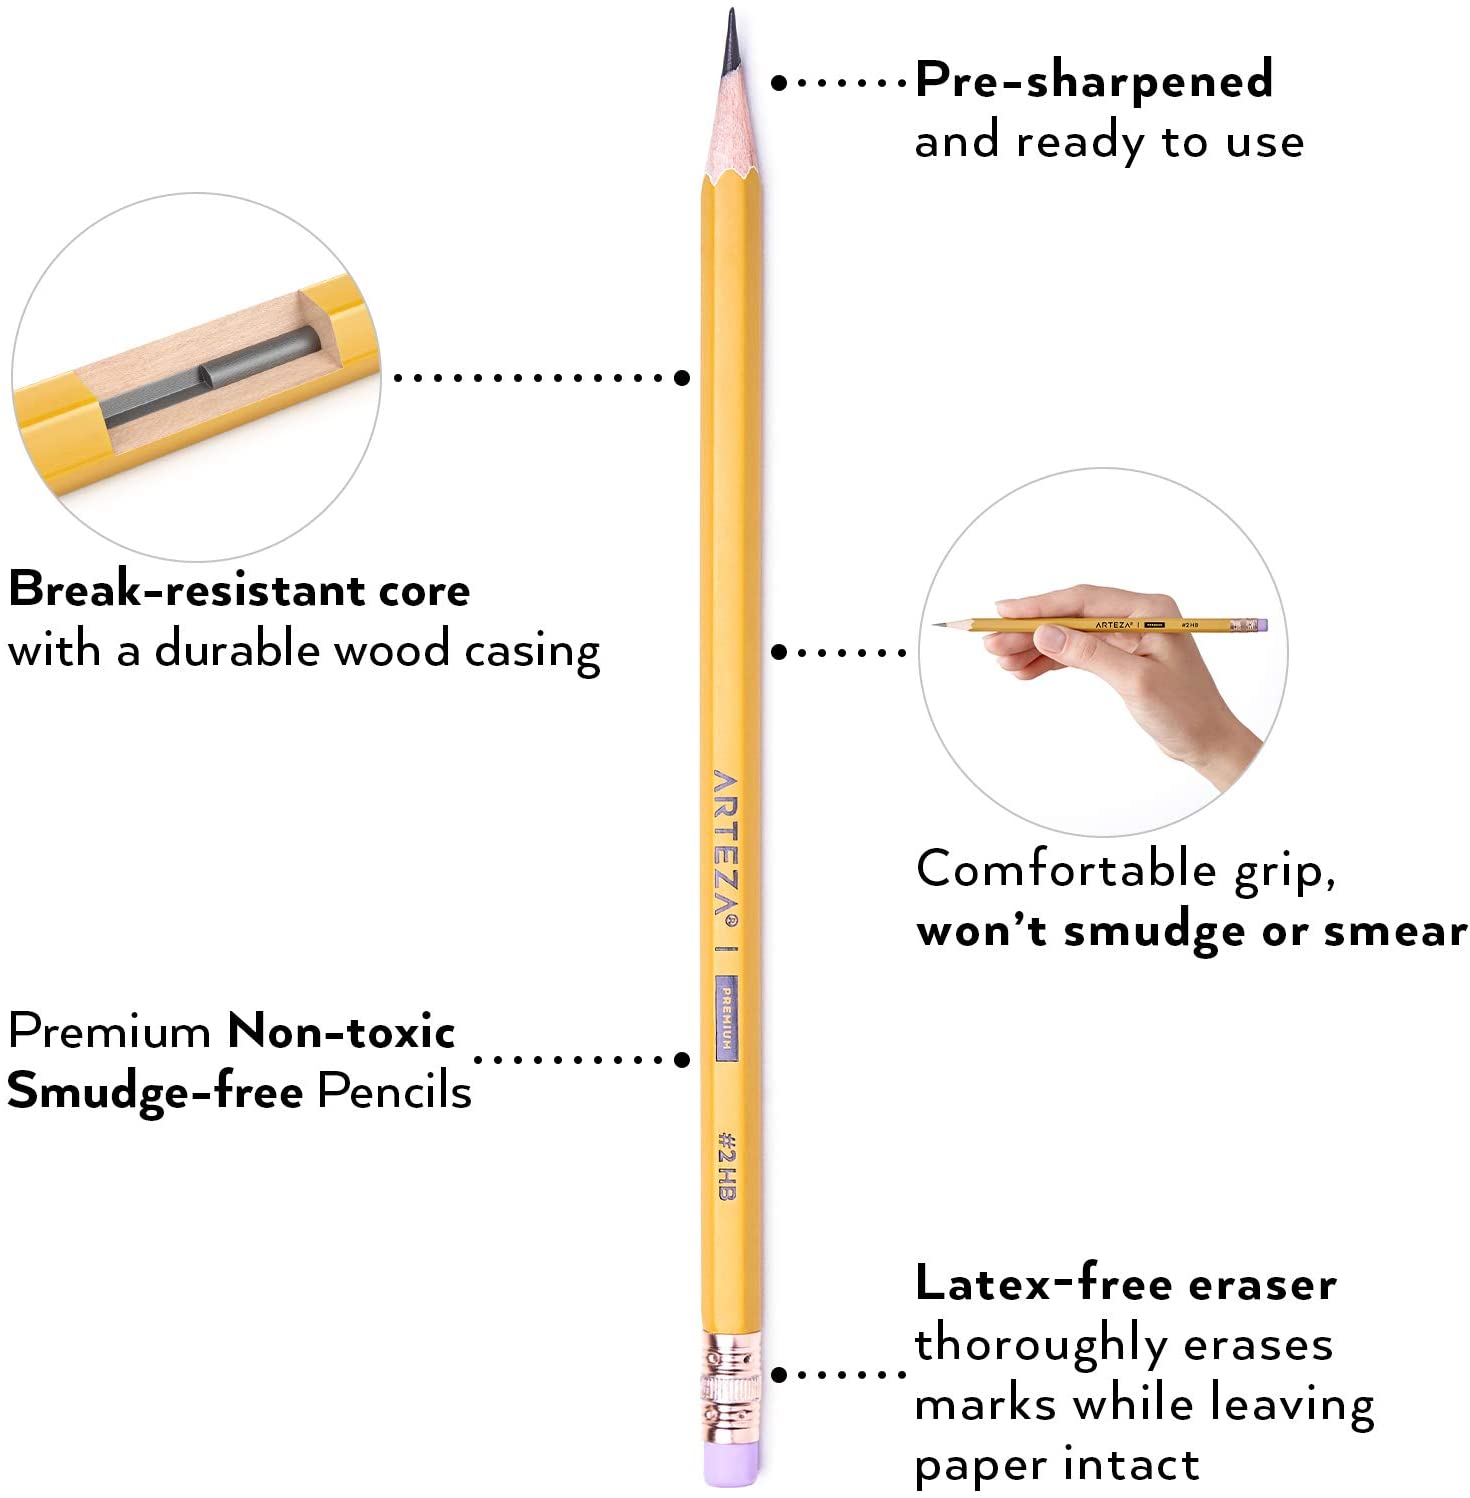 Arteza Premium Automatic Pencil Sharpener